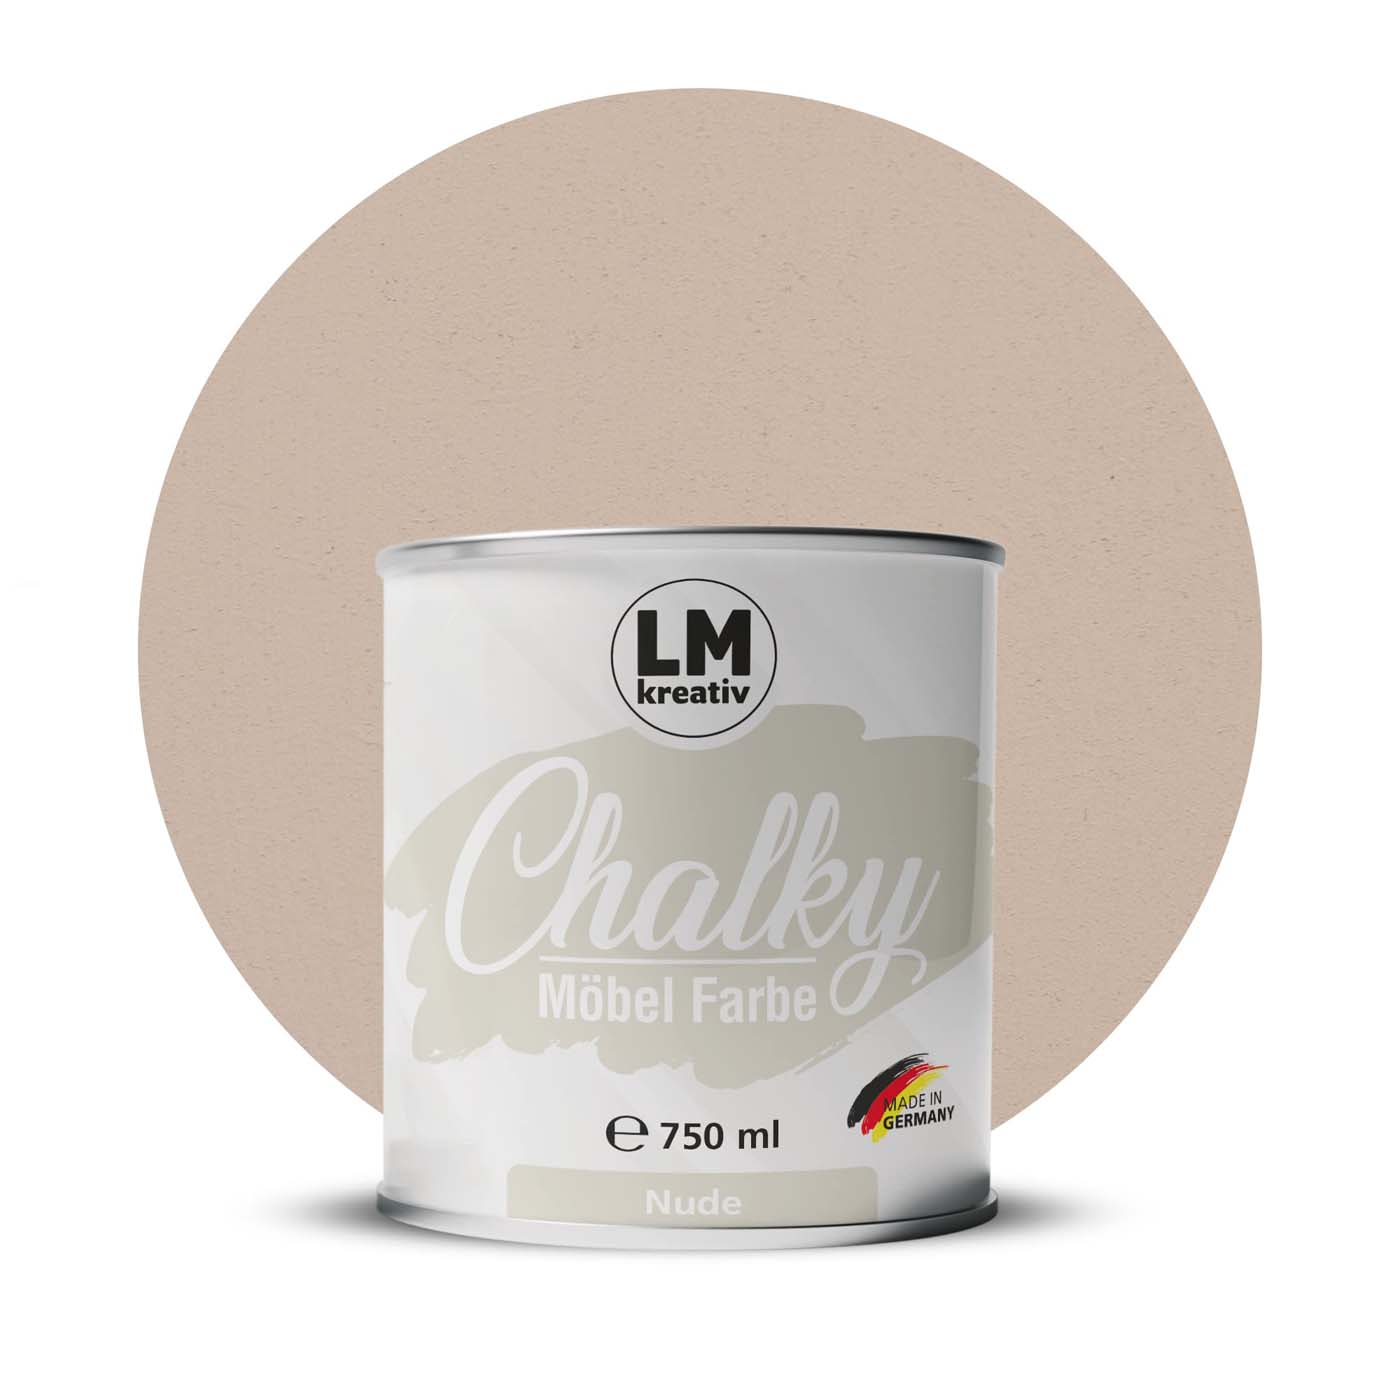 Chalky-Möbelfarbe-750-ml-1-05-kg-Nude